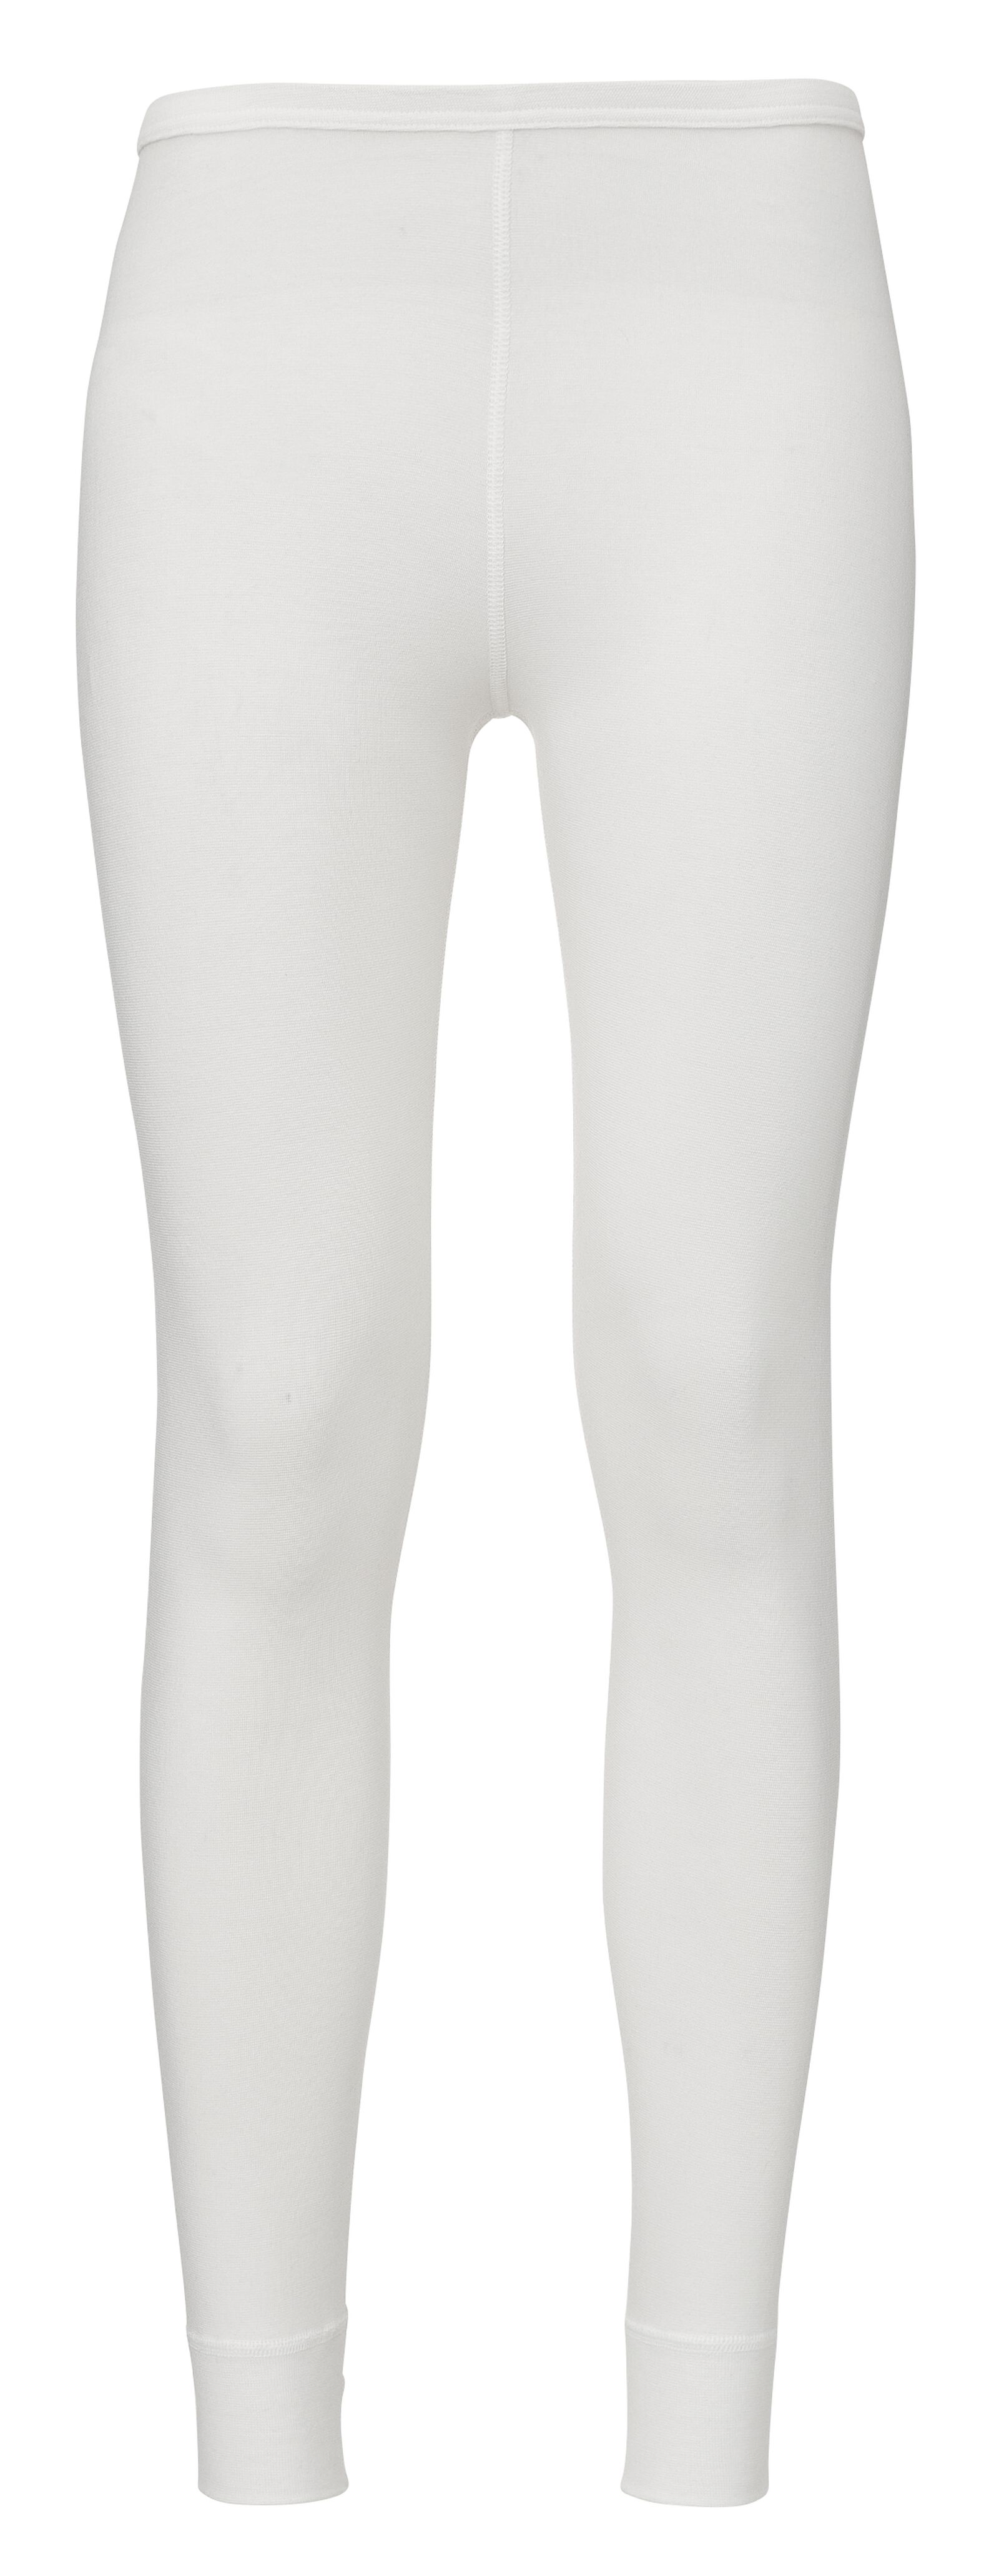 pantalon thermique femme blanc - HEMA